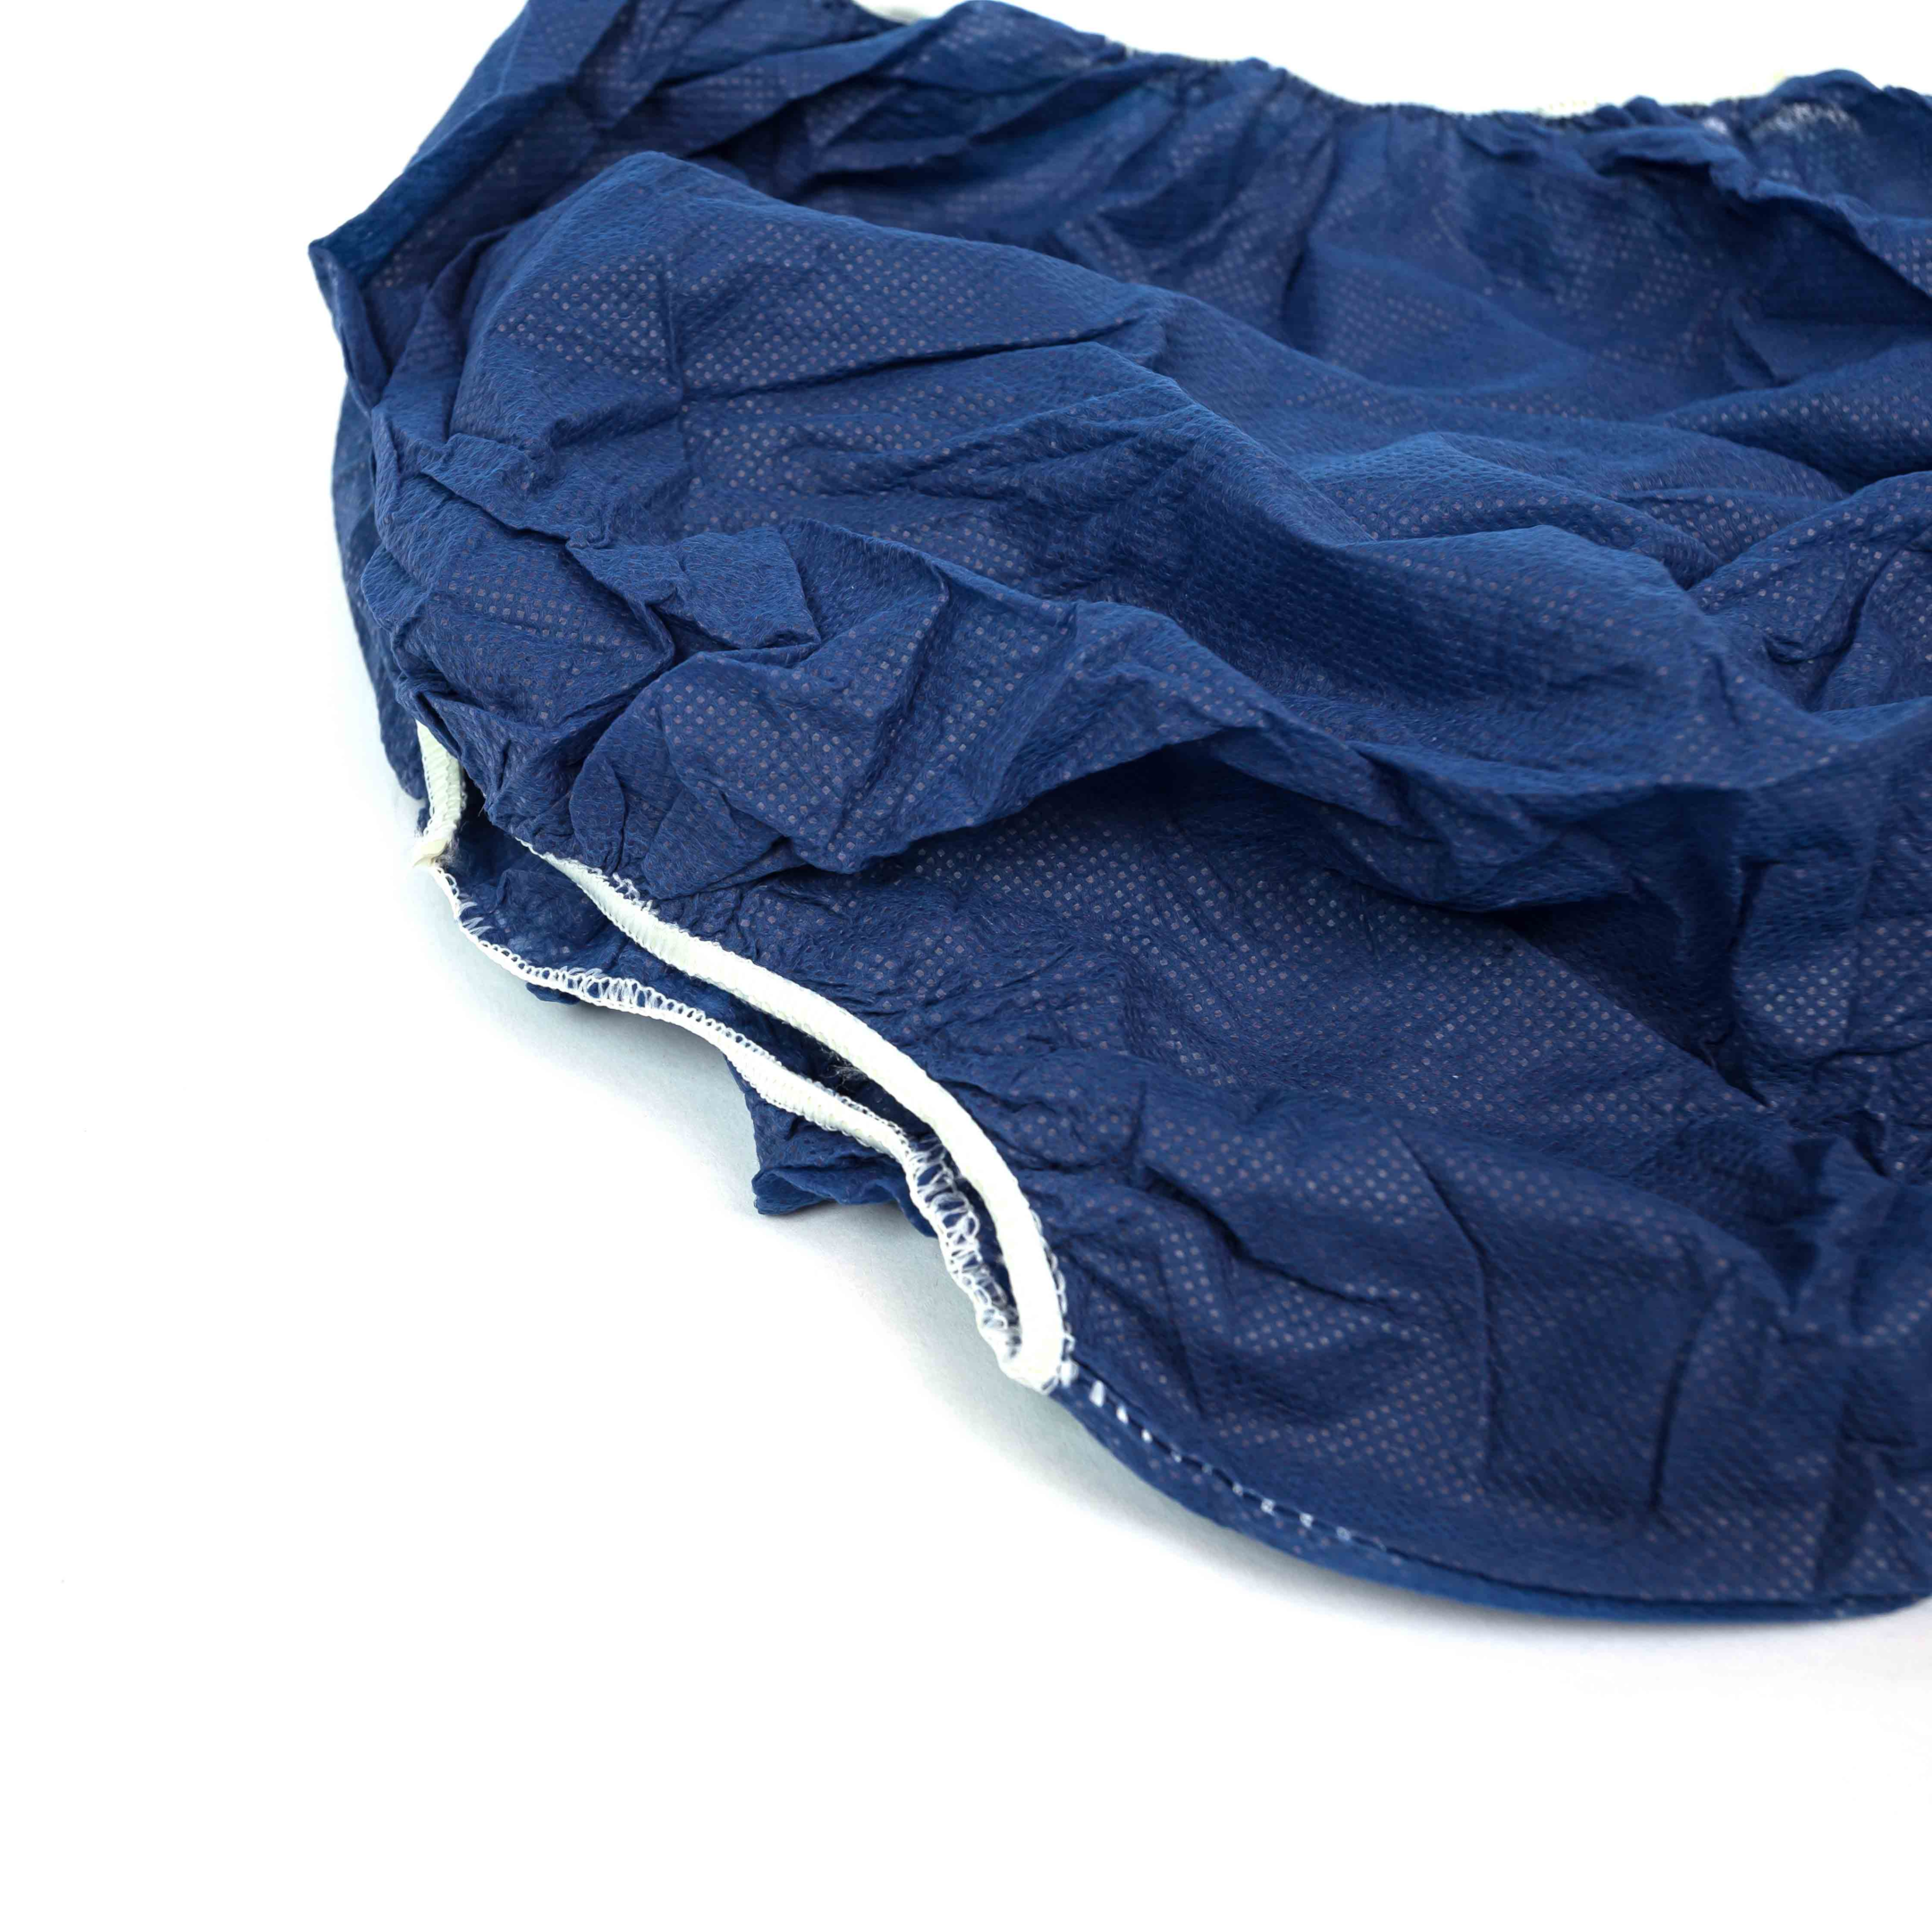 Wholesale Disposable Spa Panties: Comfort meets Hygiene - YouFu